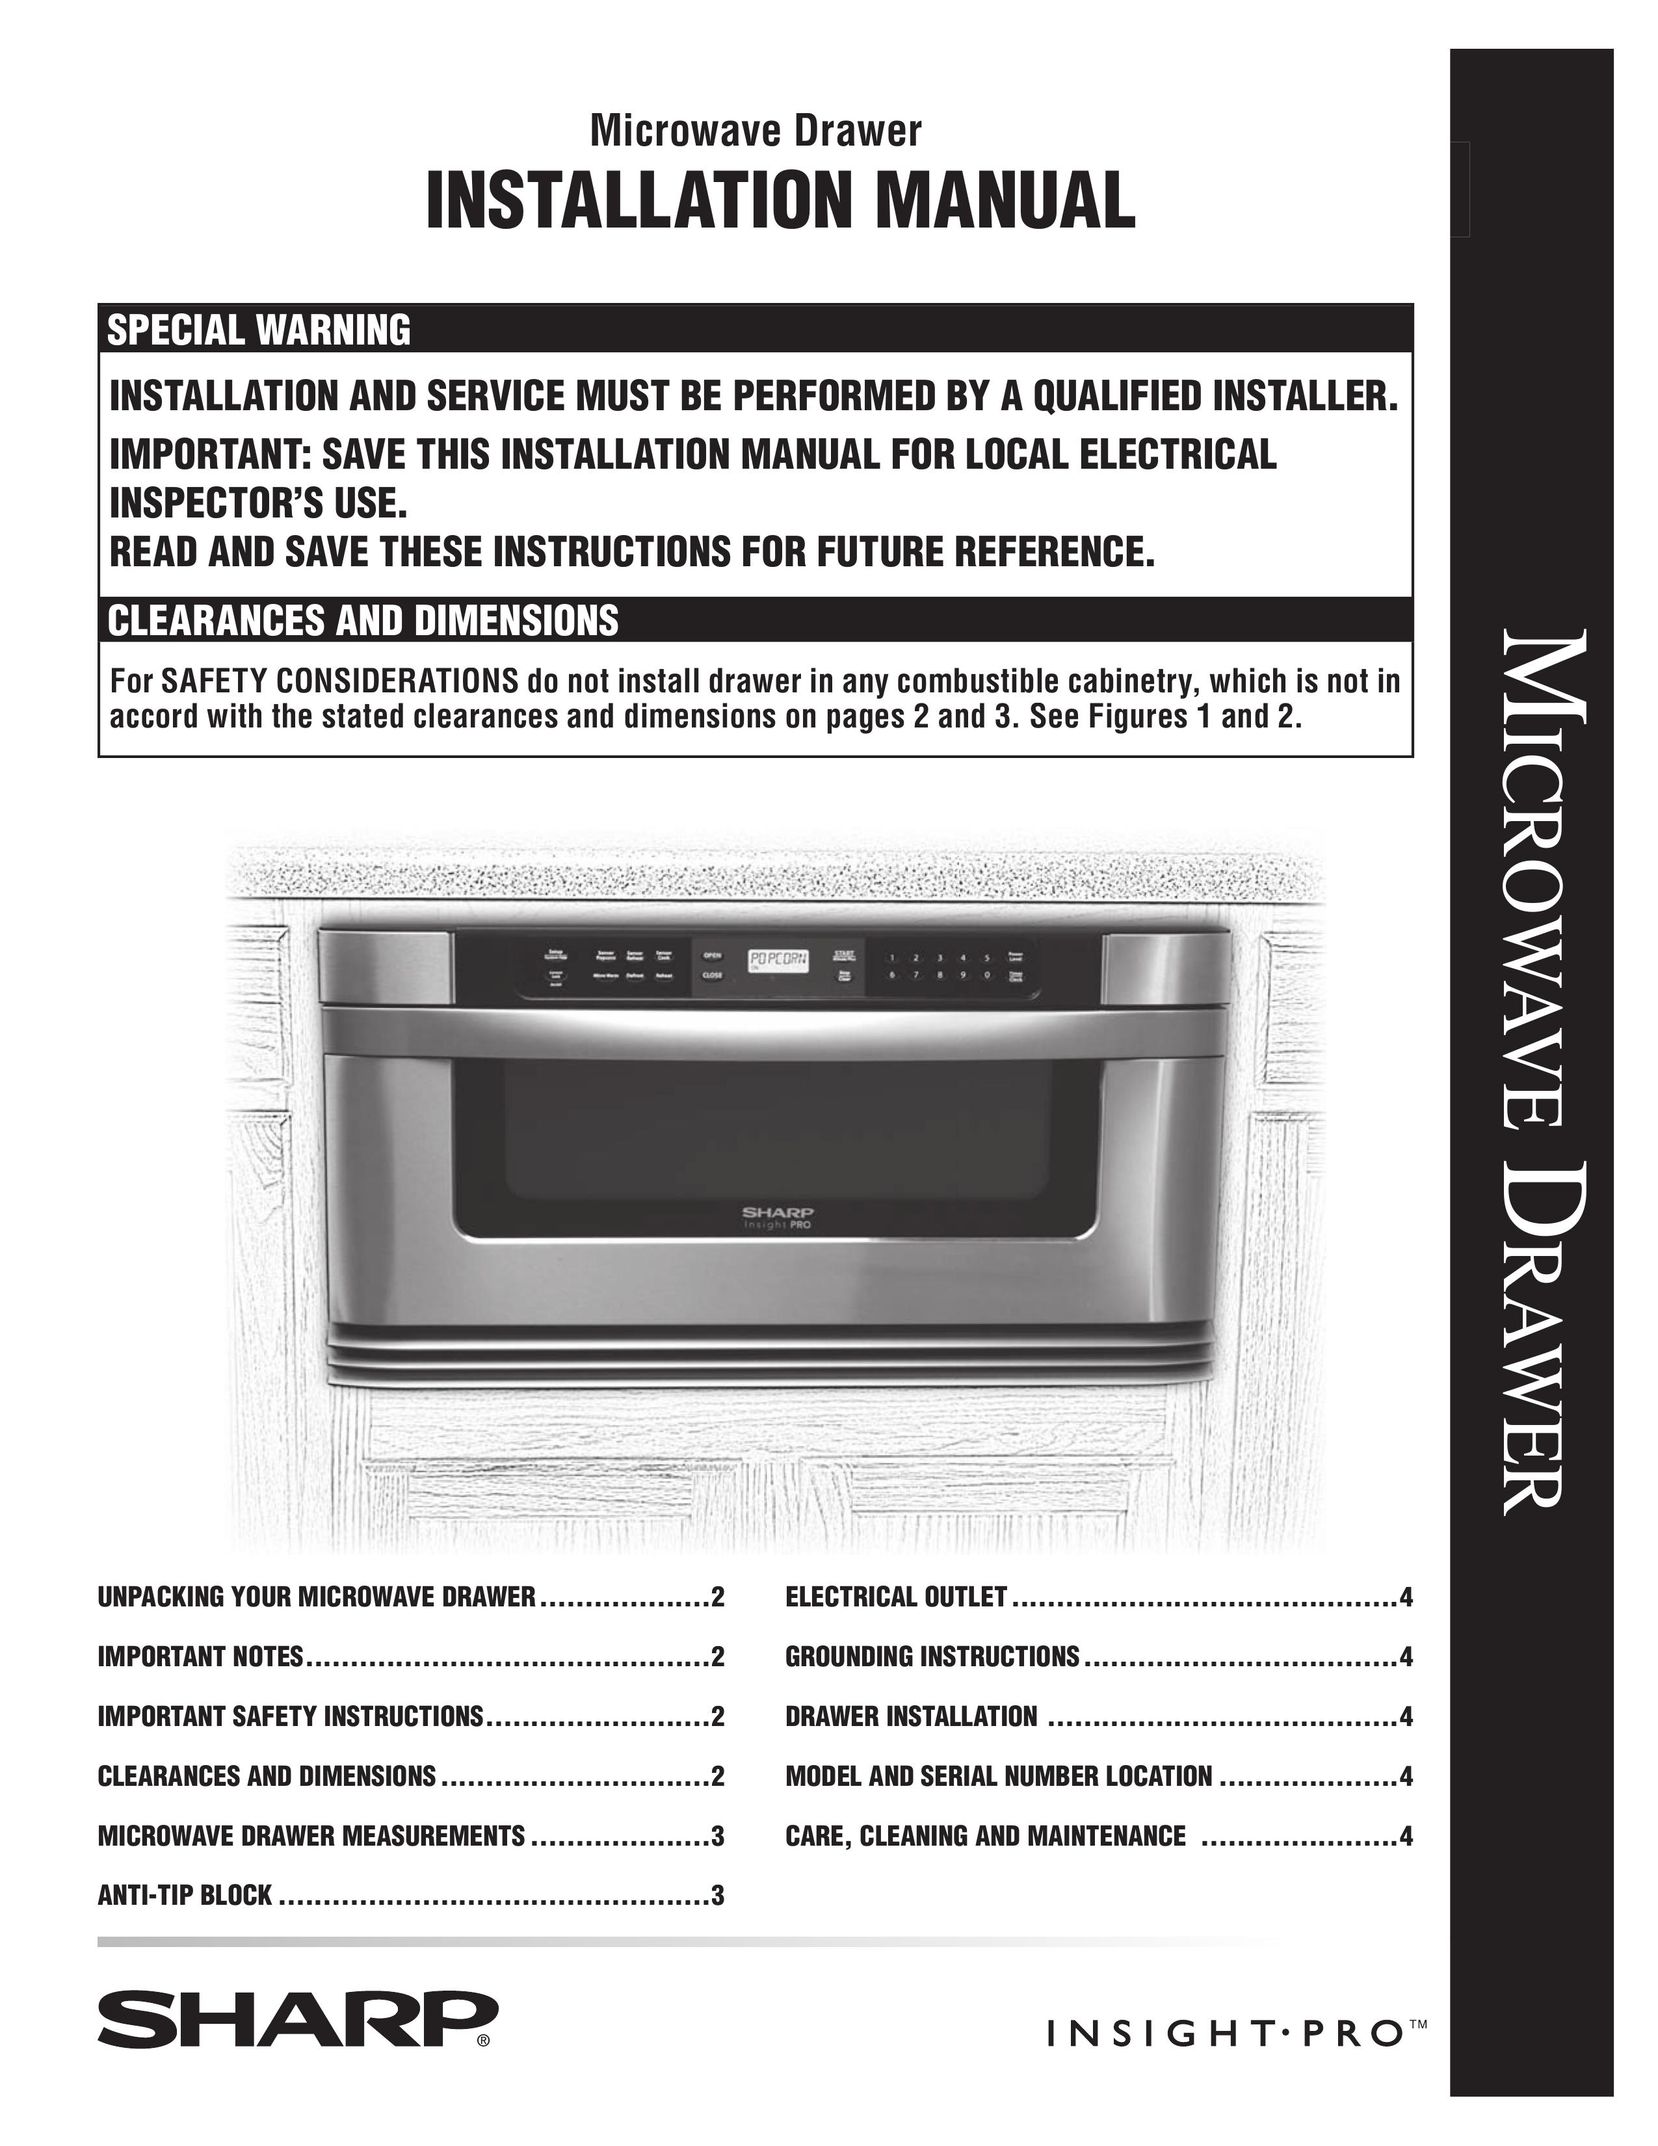 Sharp Inside Pro Microwave Oven User Manual